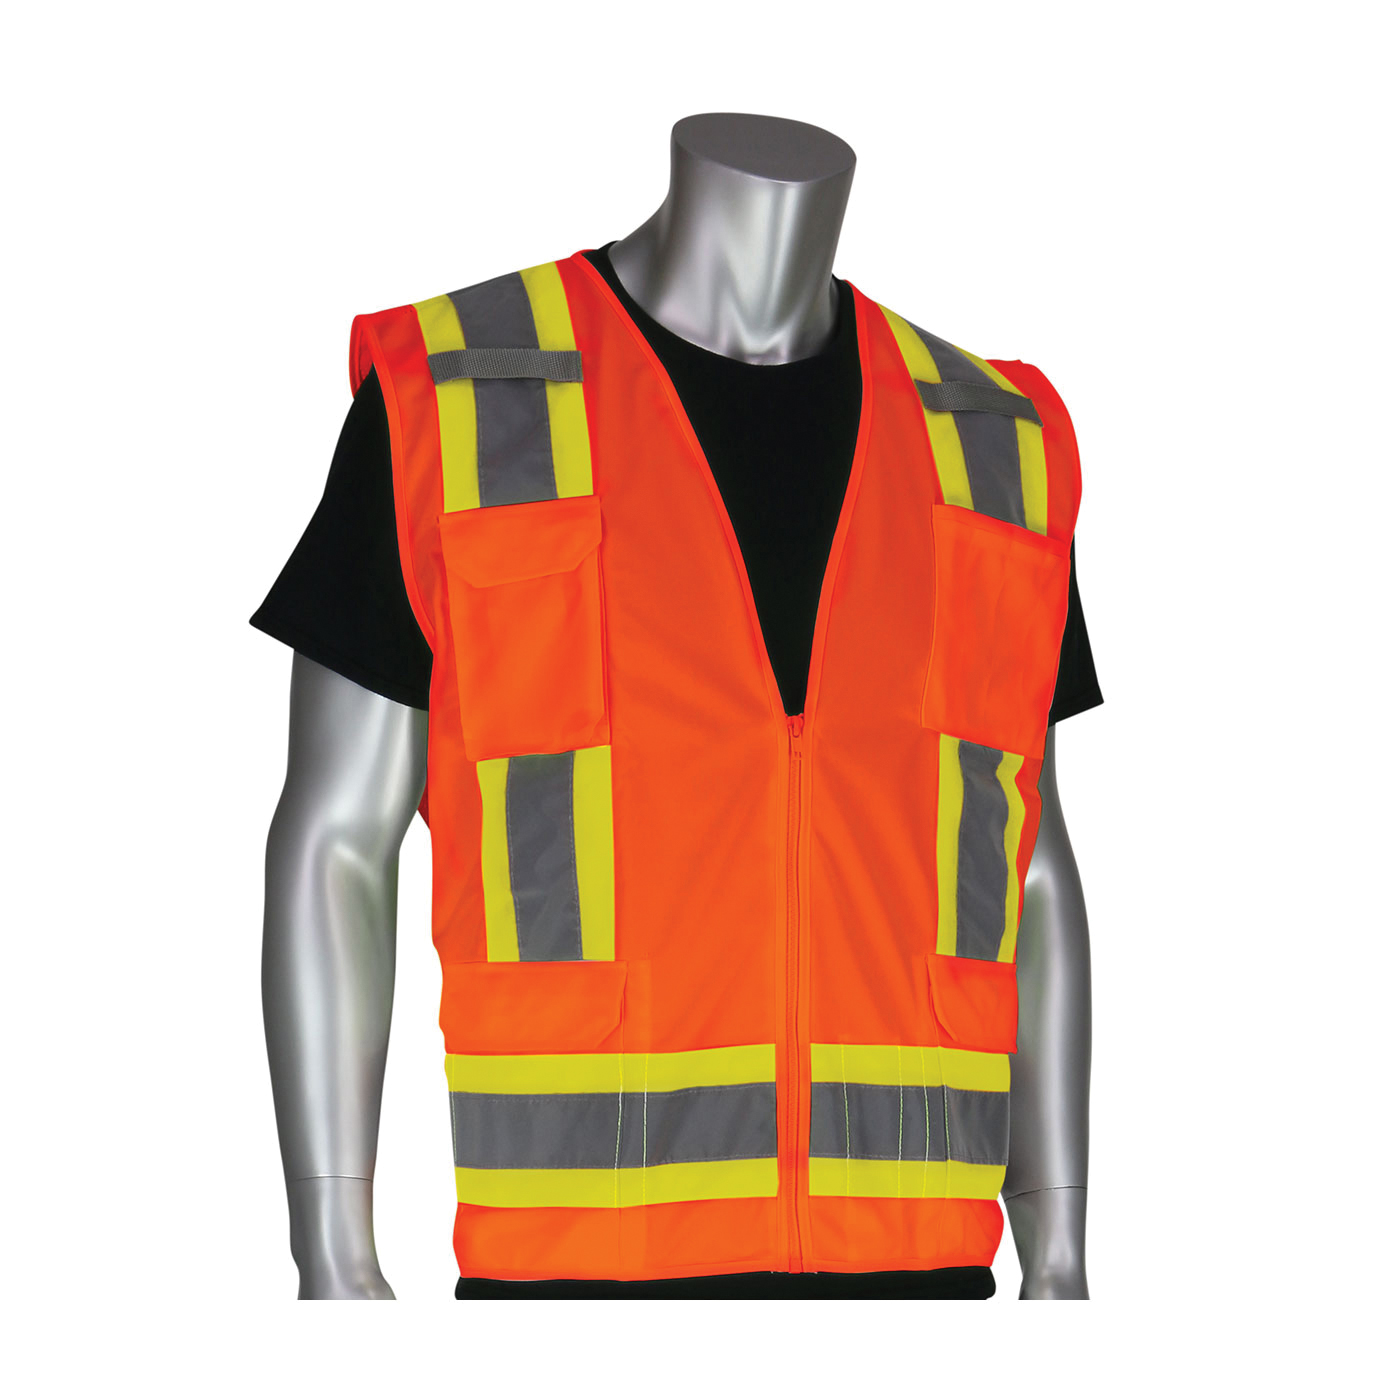 PIP® 302-0500S-ORG/L 2-Tone Surveyor Safety Vest, L, Hi-Viz Orange, Polyester/Solid Tricot, Zipper Closure, 11 Pockets, ANSI Class: Class 2, Specifications Met: ANSI 107 Type R